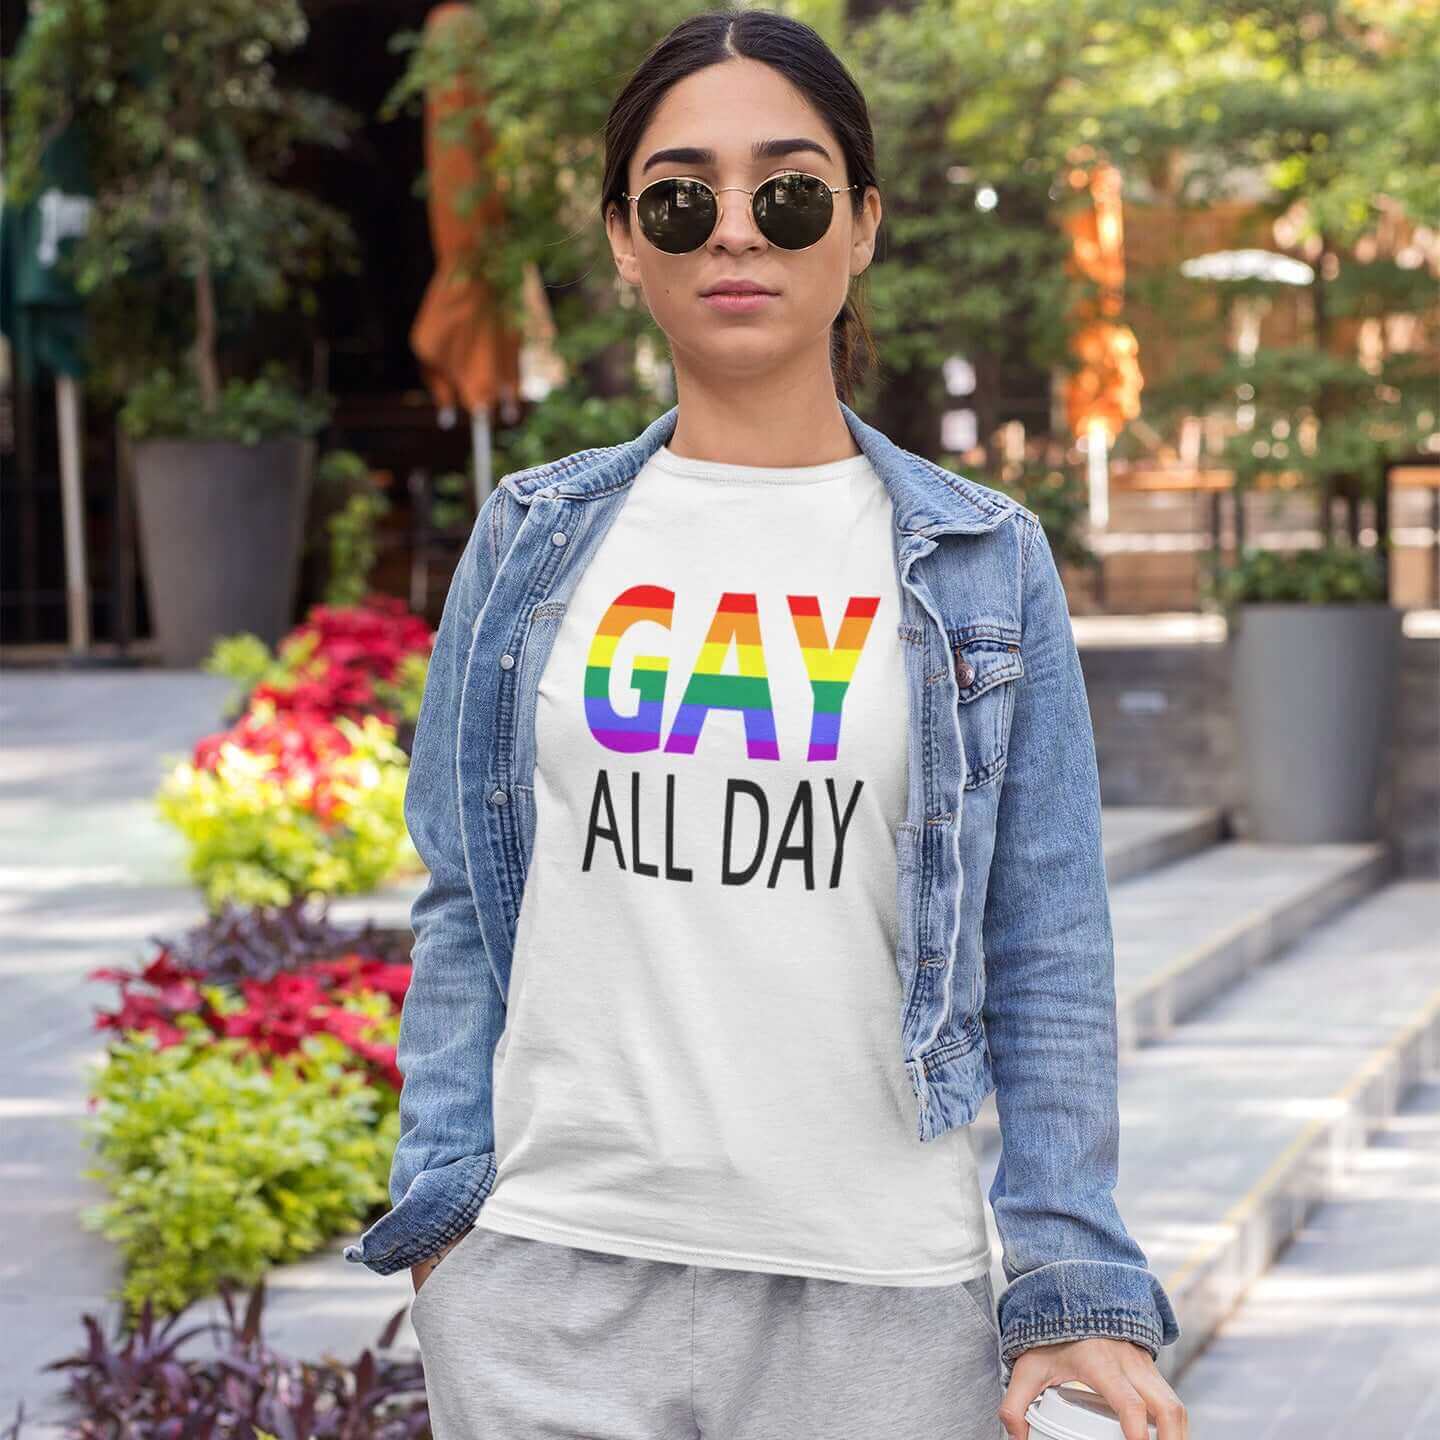 Gay all day LGBTQ rainbow pride T-shirt